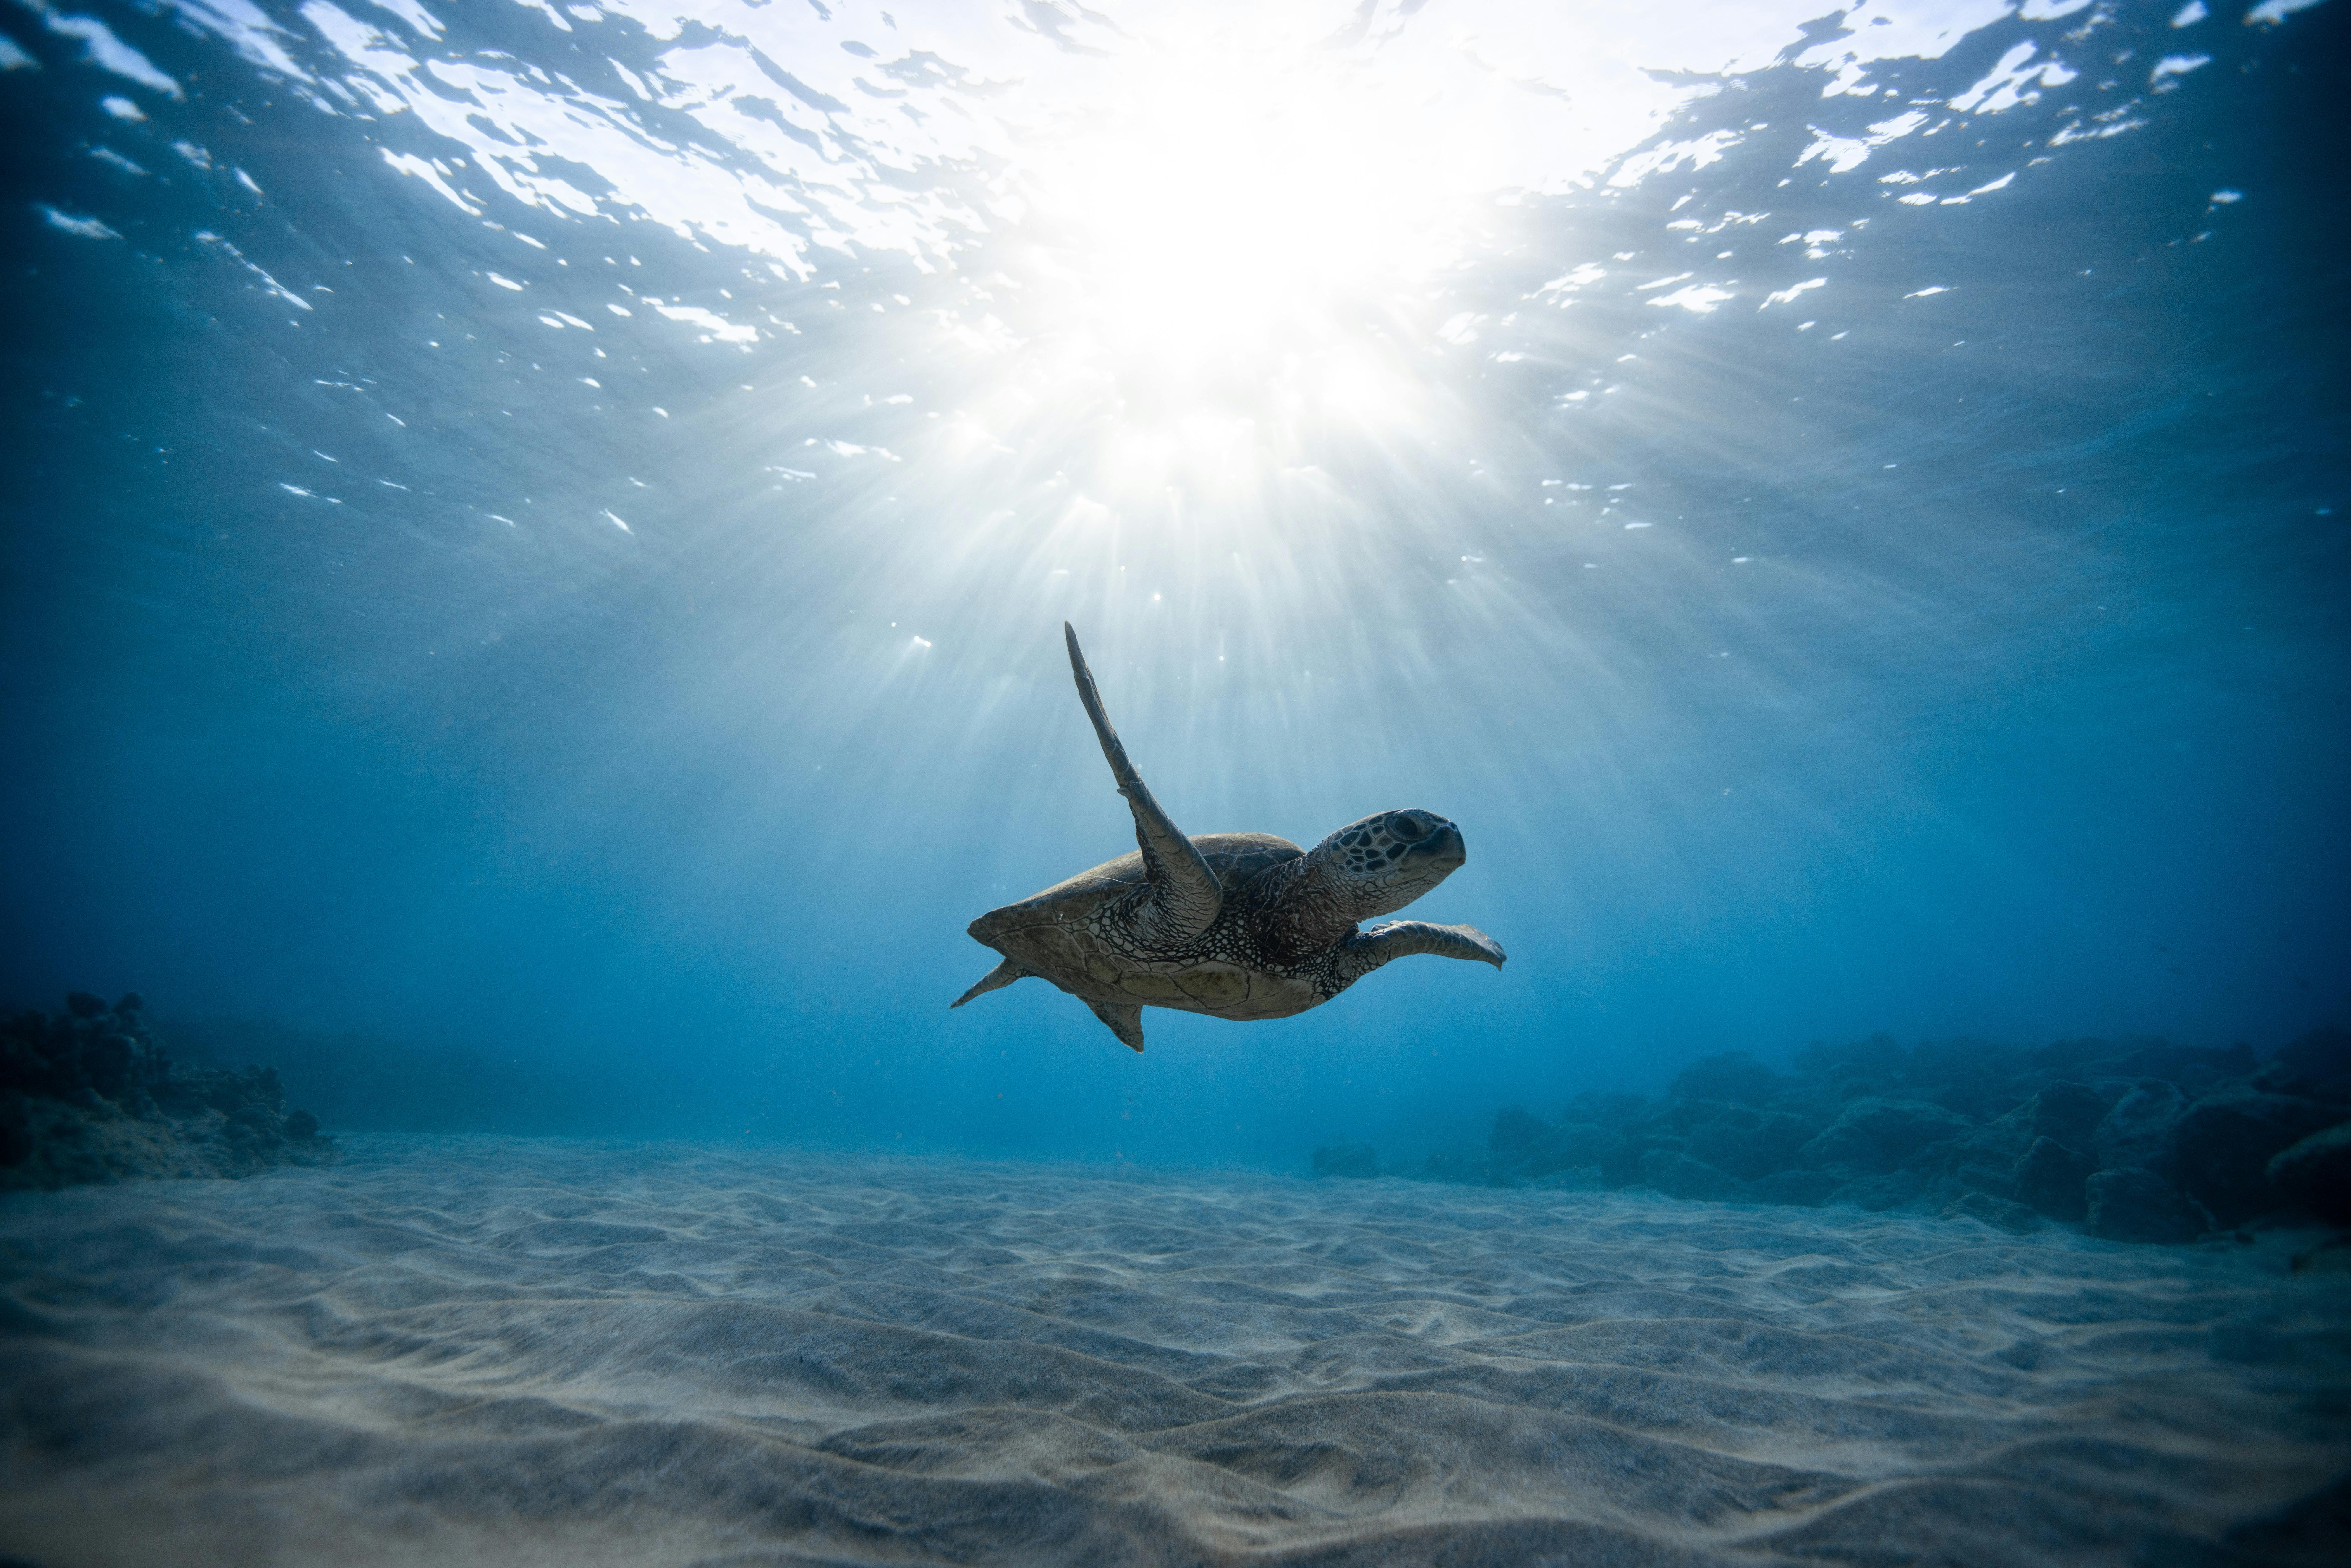 Ocean Photos, Download The BEST Free Ocean Stock Photos & HD Images